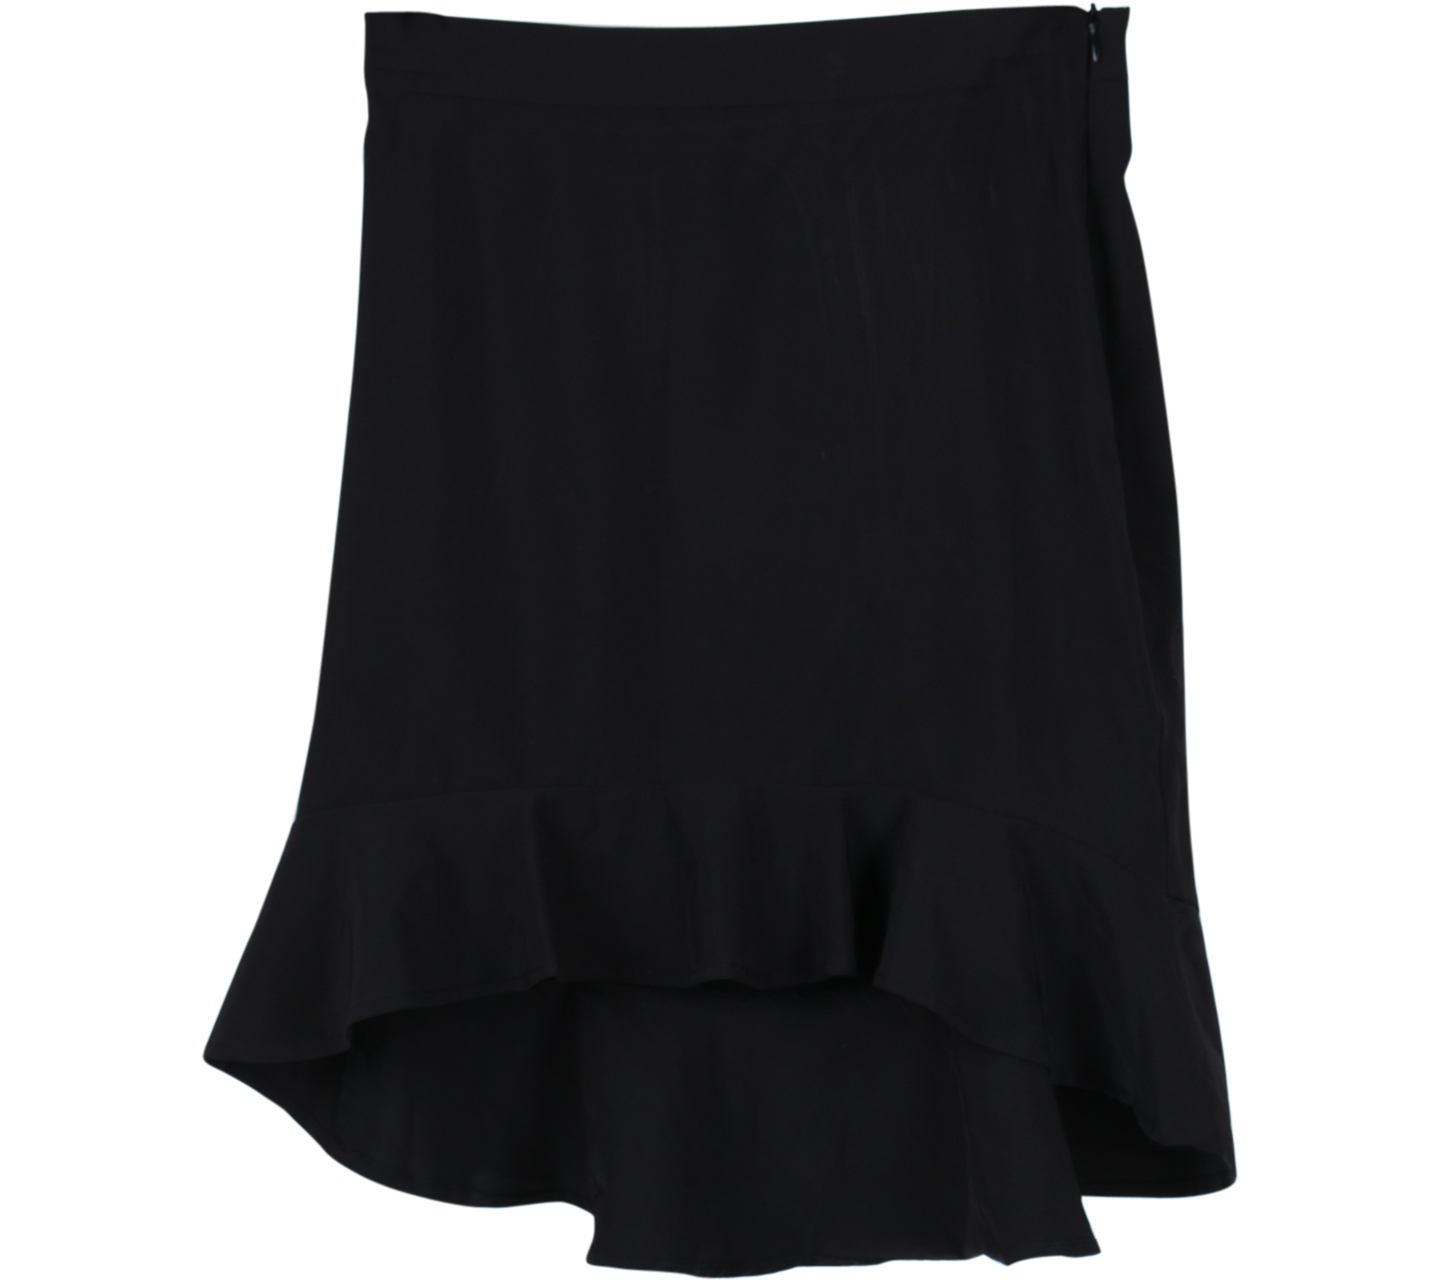 Richcoco Black Skirt